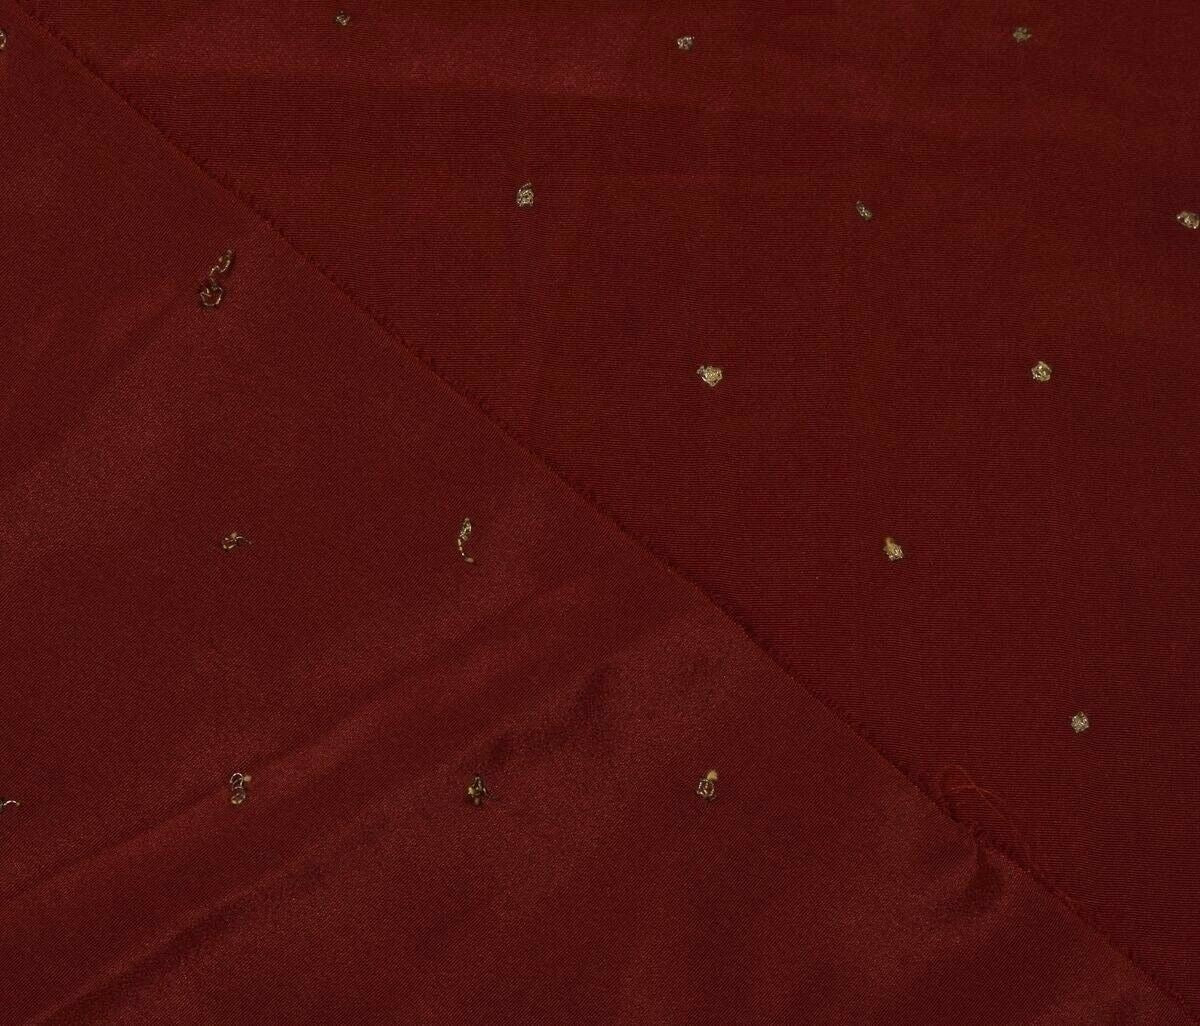 Indian Art Silk Vintage Sari Remnant Scrap Fabric for Sewing Craft Maroon